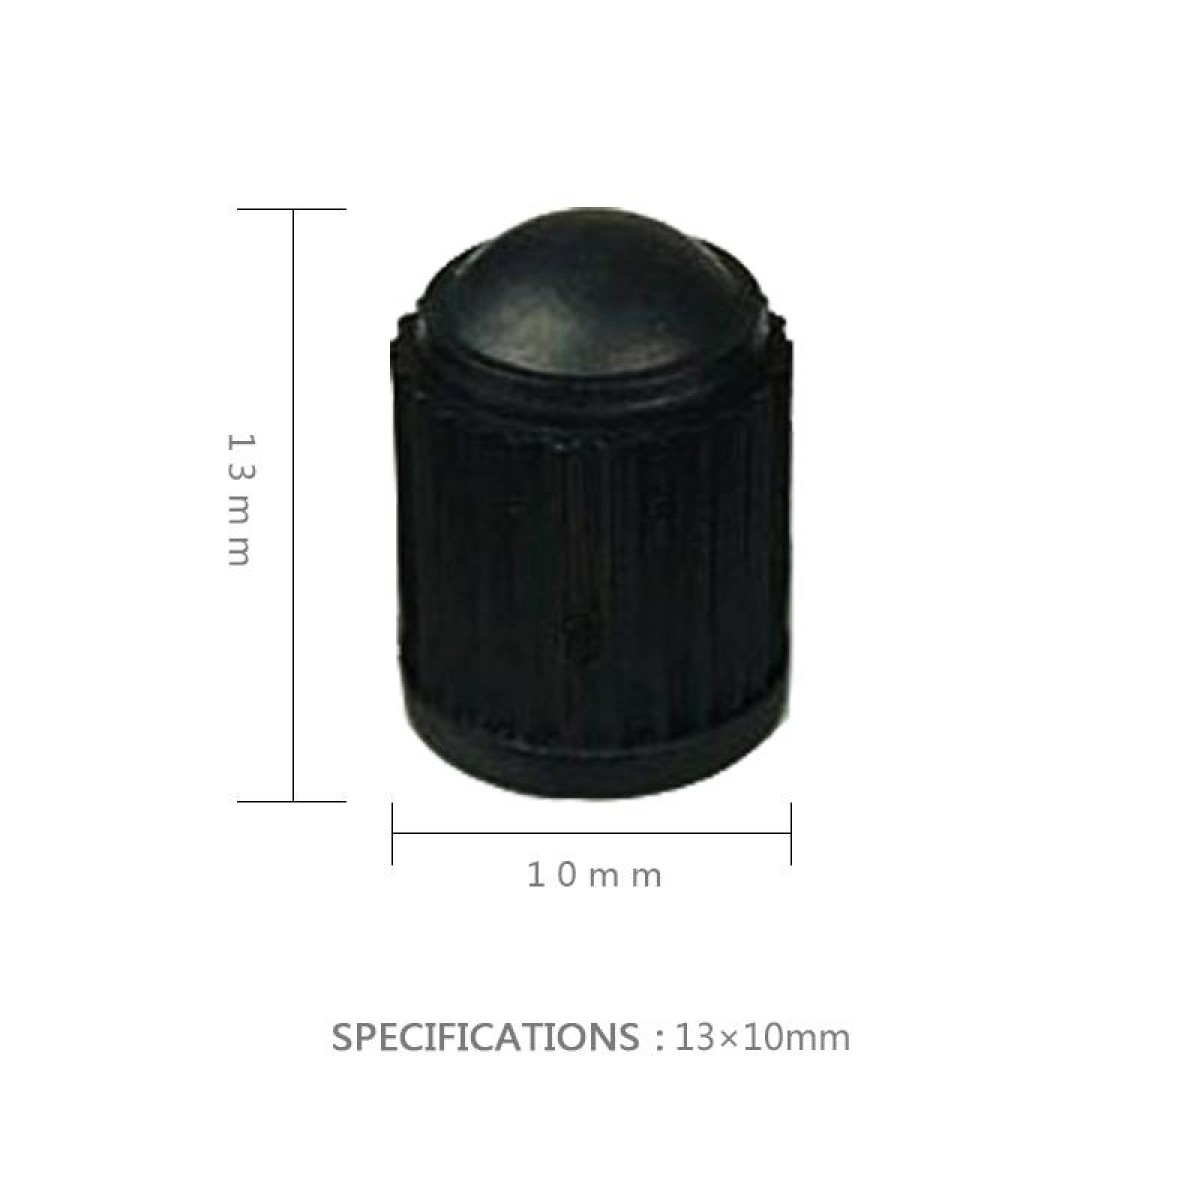 200 PCS Black Tire valve Dust Rubber Cap For Bicycle And Car, Diameter: 10mm(Black)